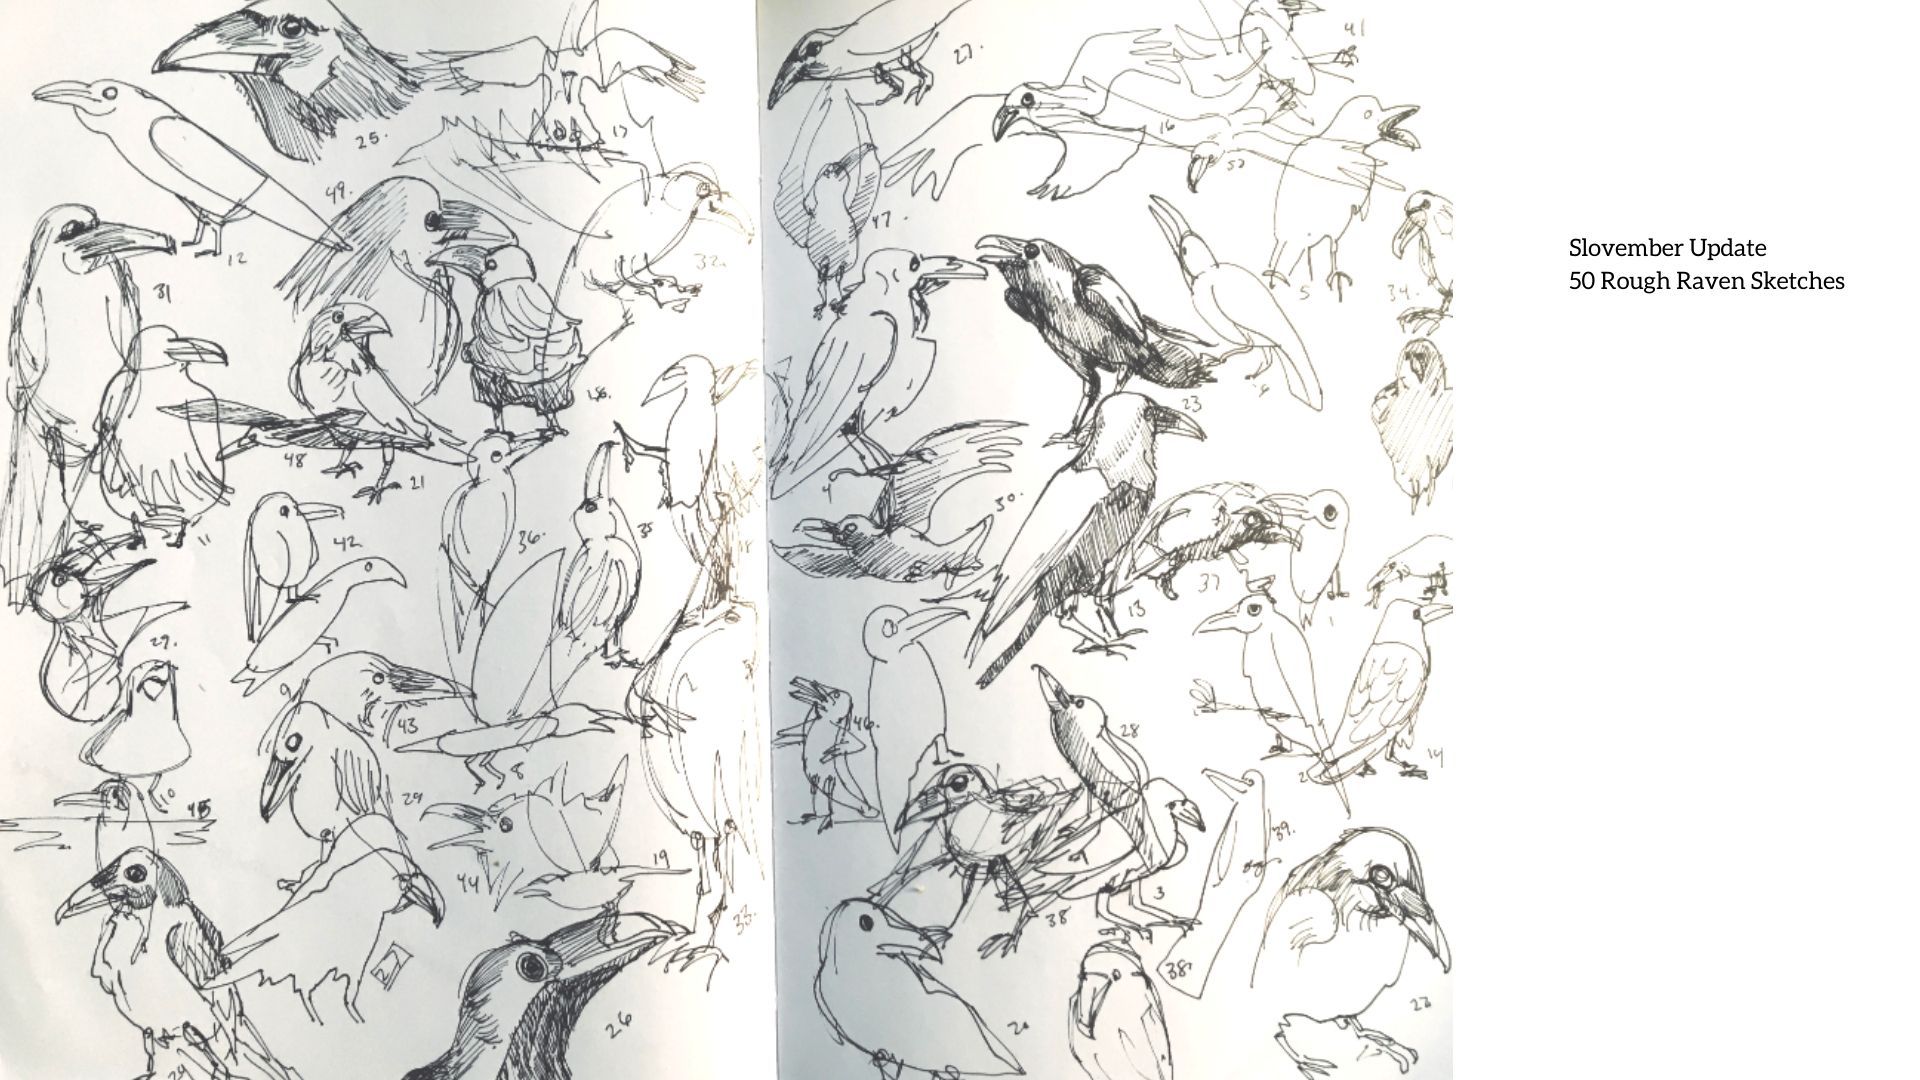 Slovember Update 50 Rough Raven Sketches (3).jpg